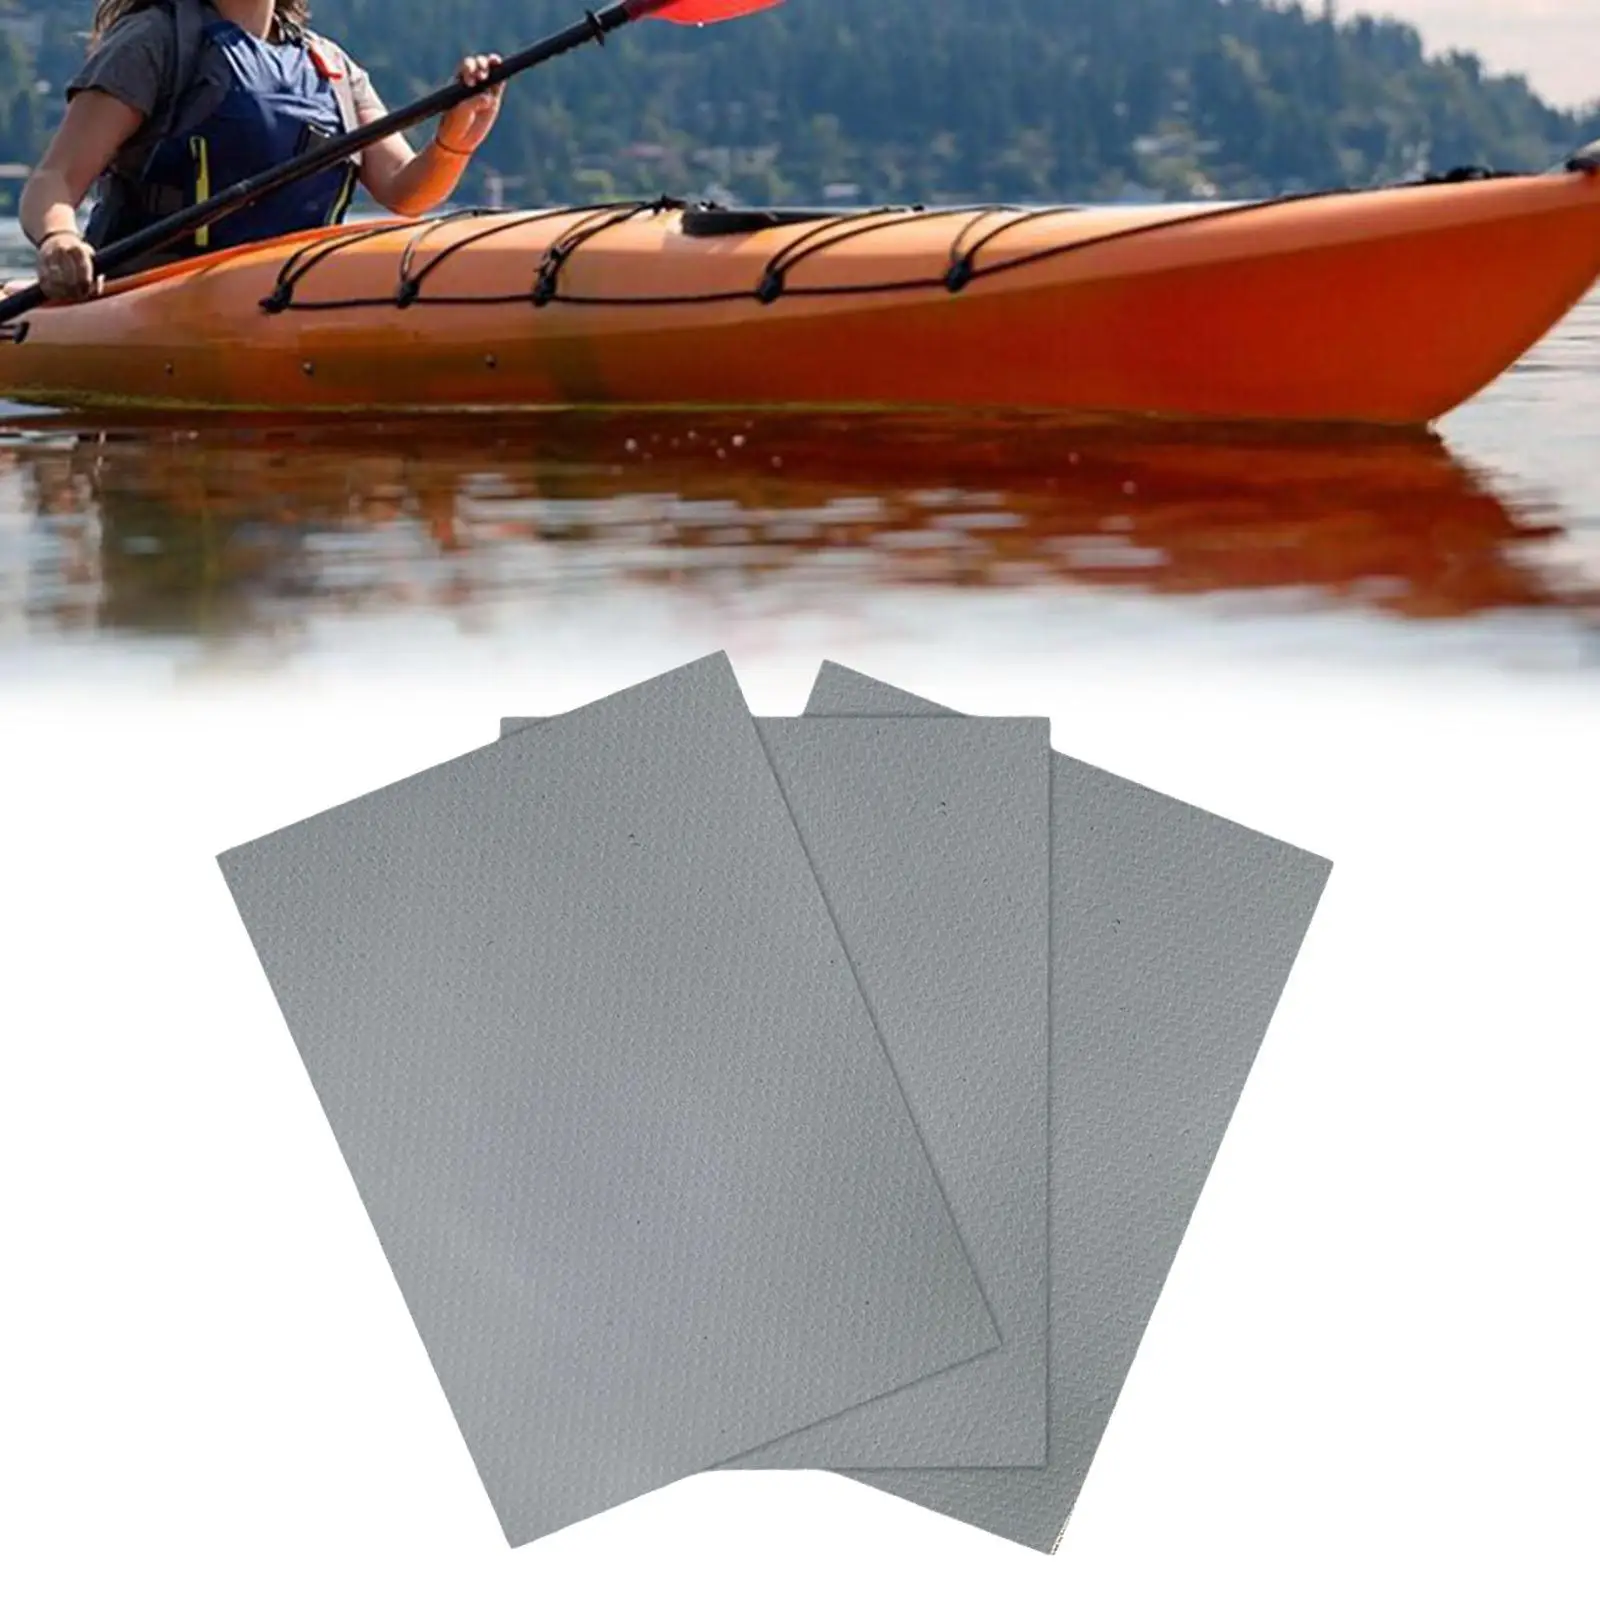 Durable Waterproof PVC Repair Patch Tool for Inflatable Kayak Boat Dinghy Canoe 